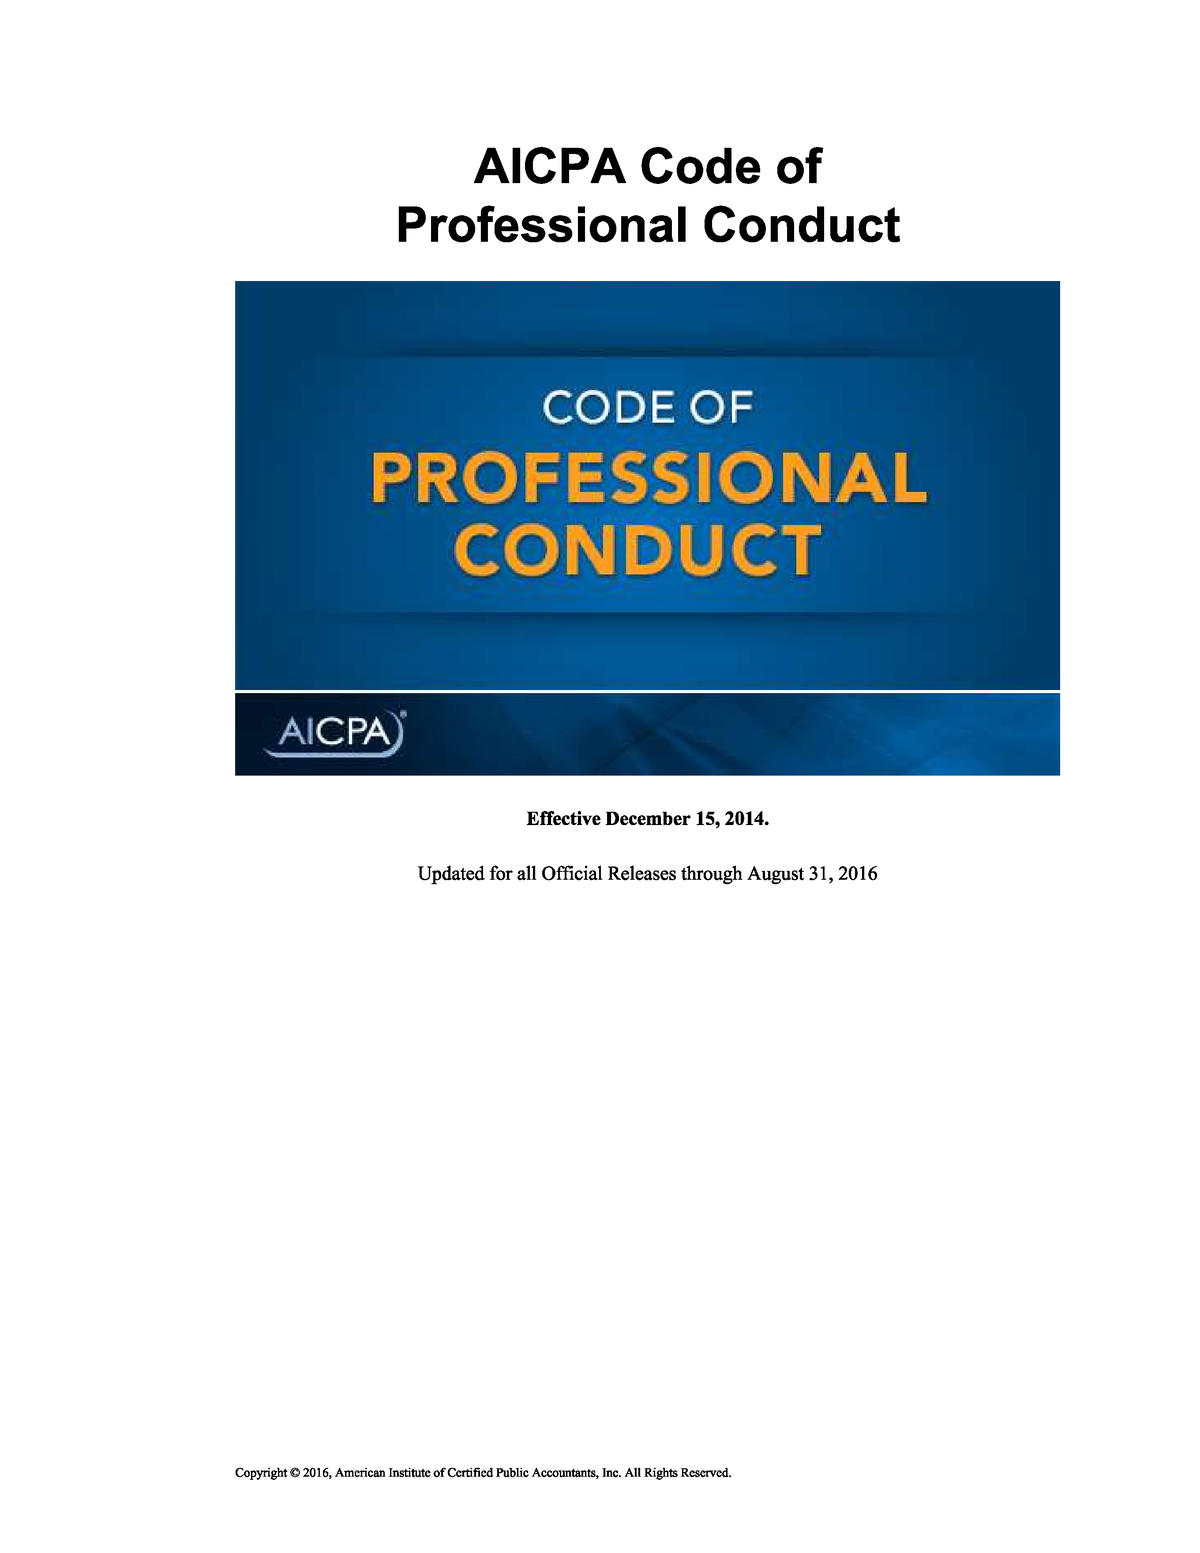 CODE OF Professional Conduct ACC202 Studocu